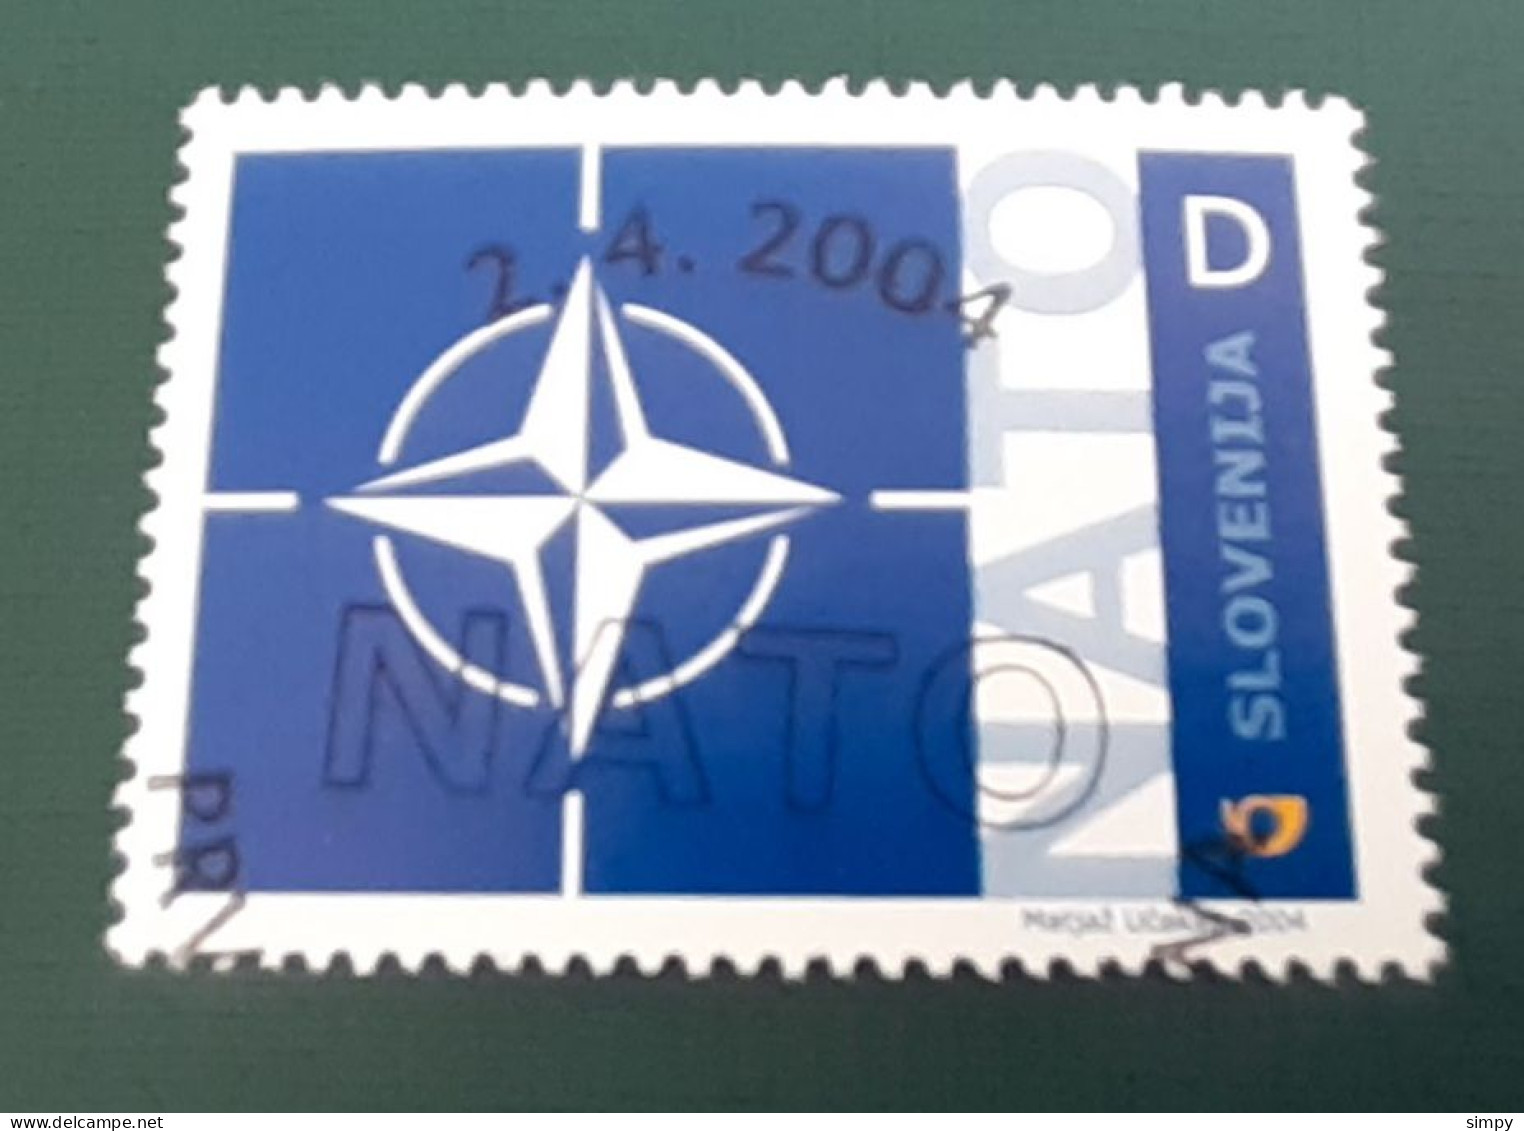 SLOVENIA 2004 Accession Of Slovenia To The NATO Michel 468 Used Stamp - Slowenien